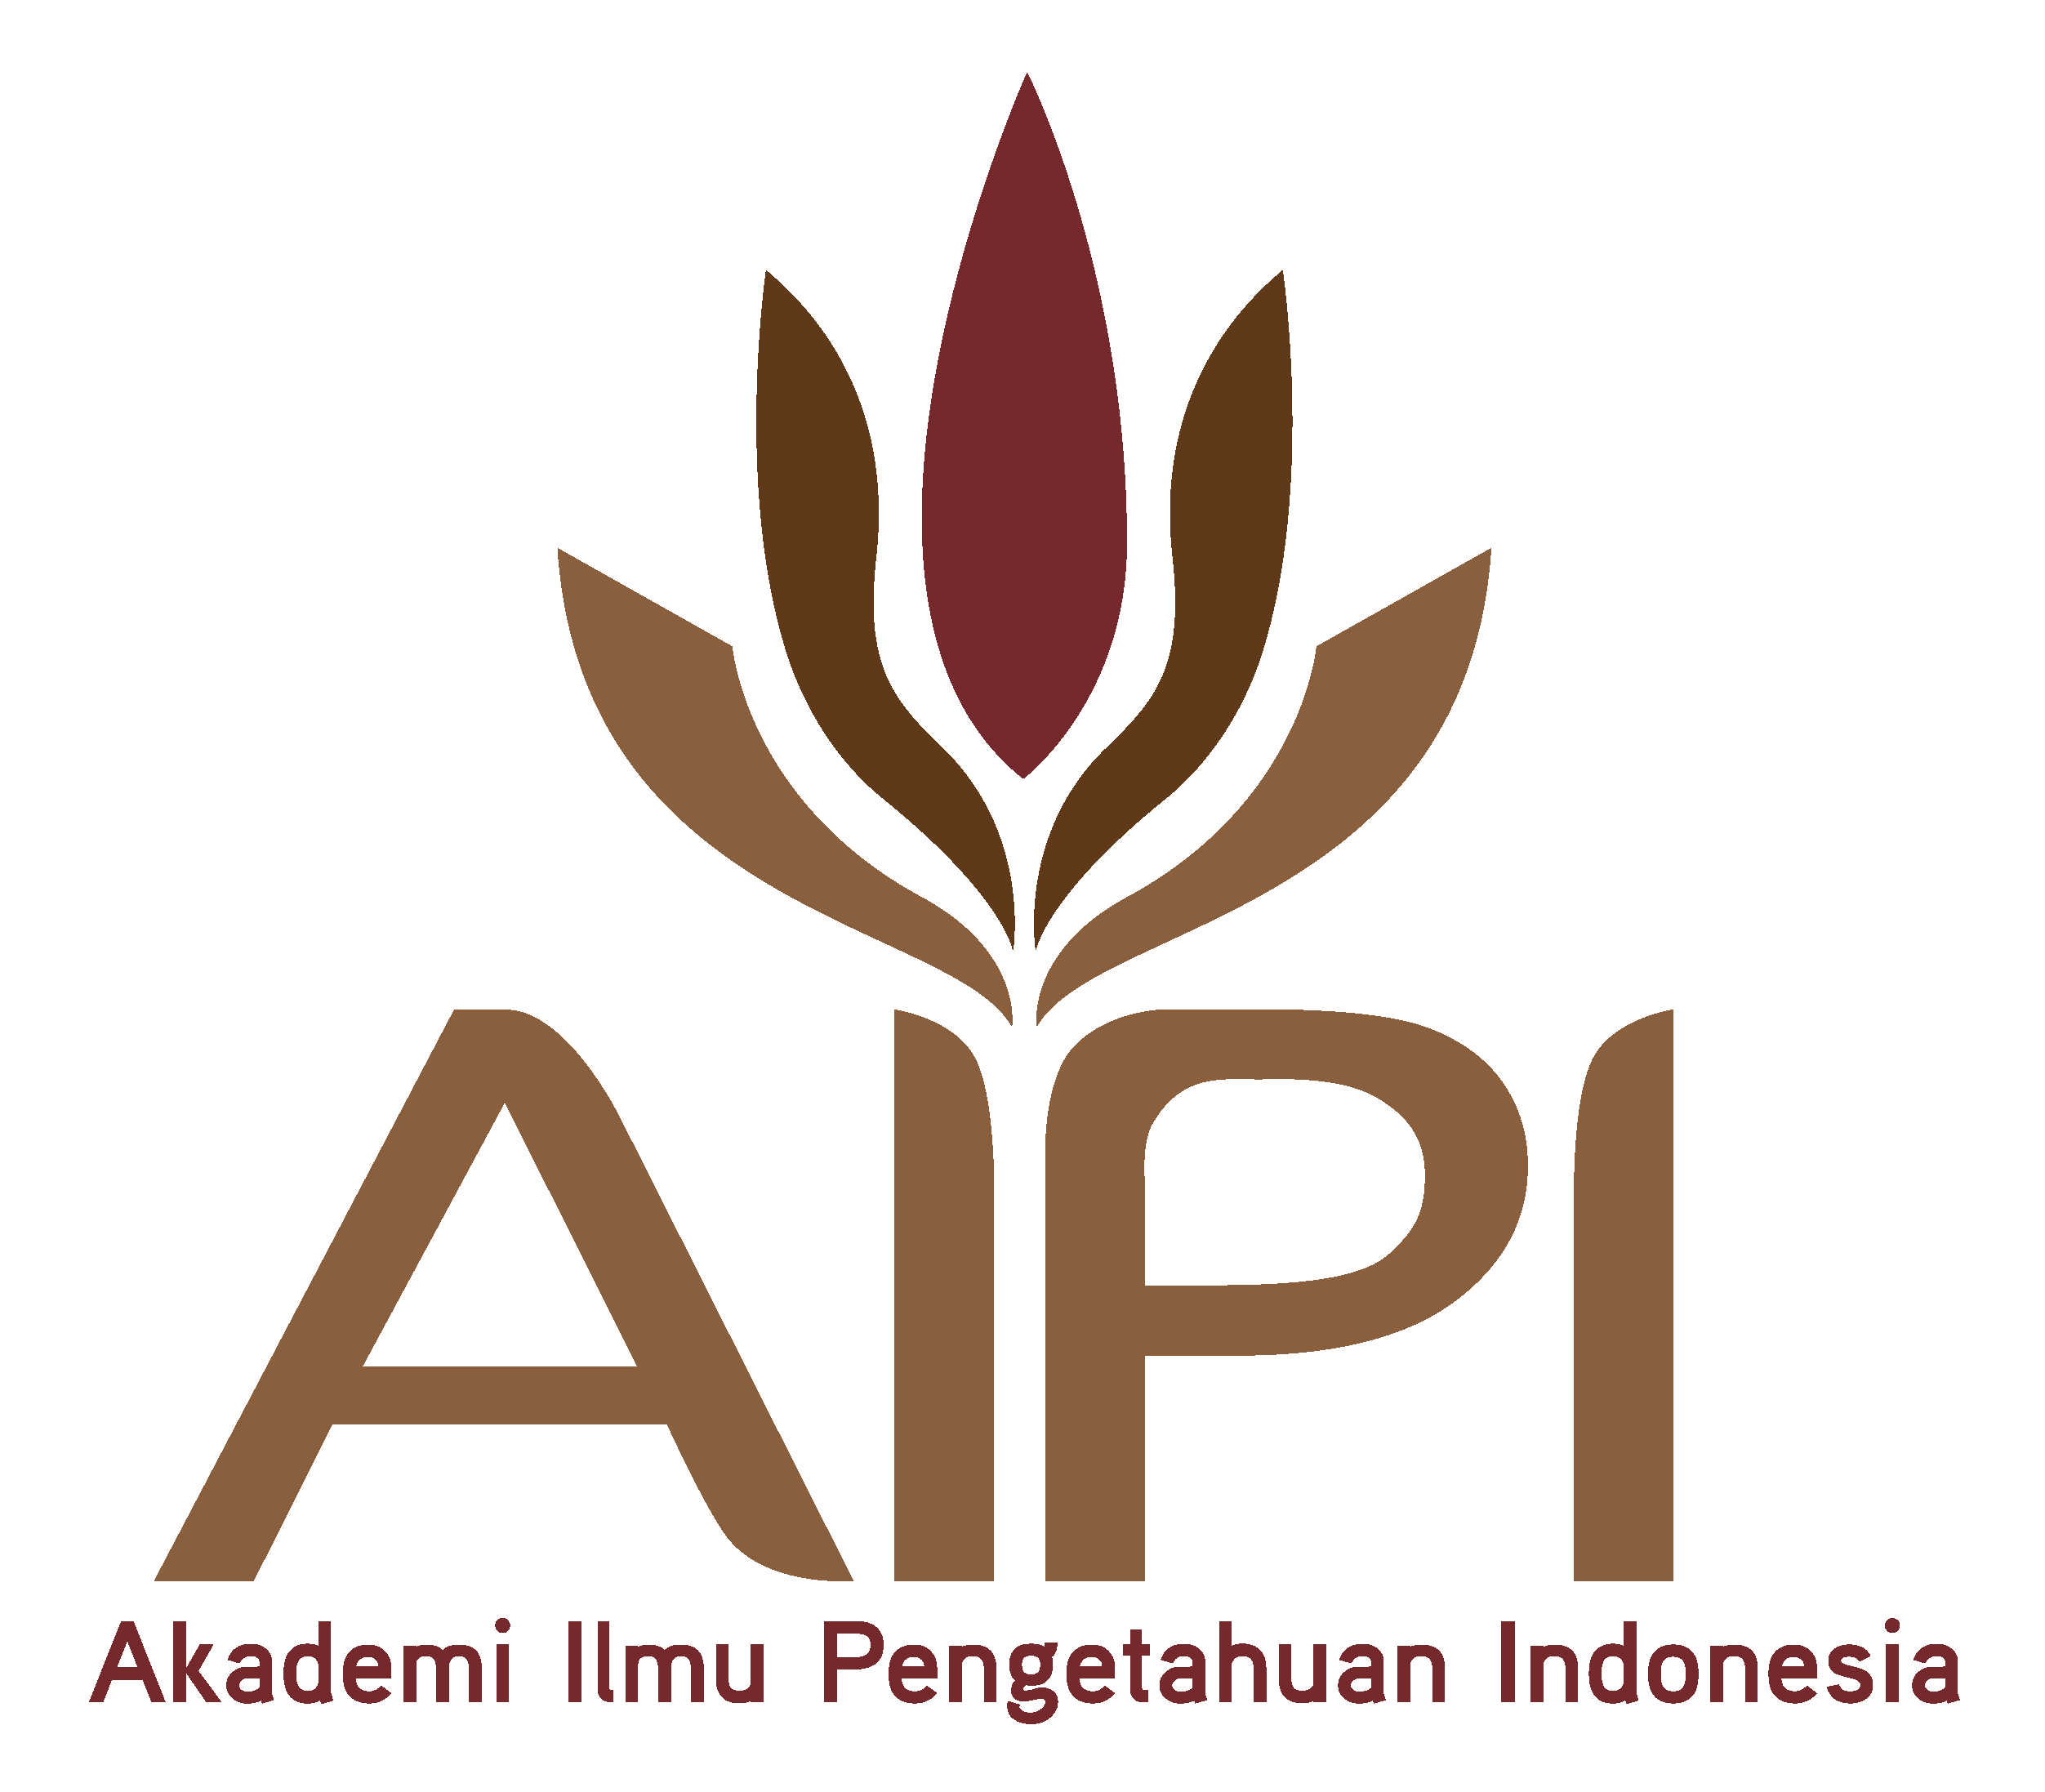 Indonesian Academy of Sciences (AIPI) 